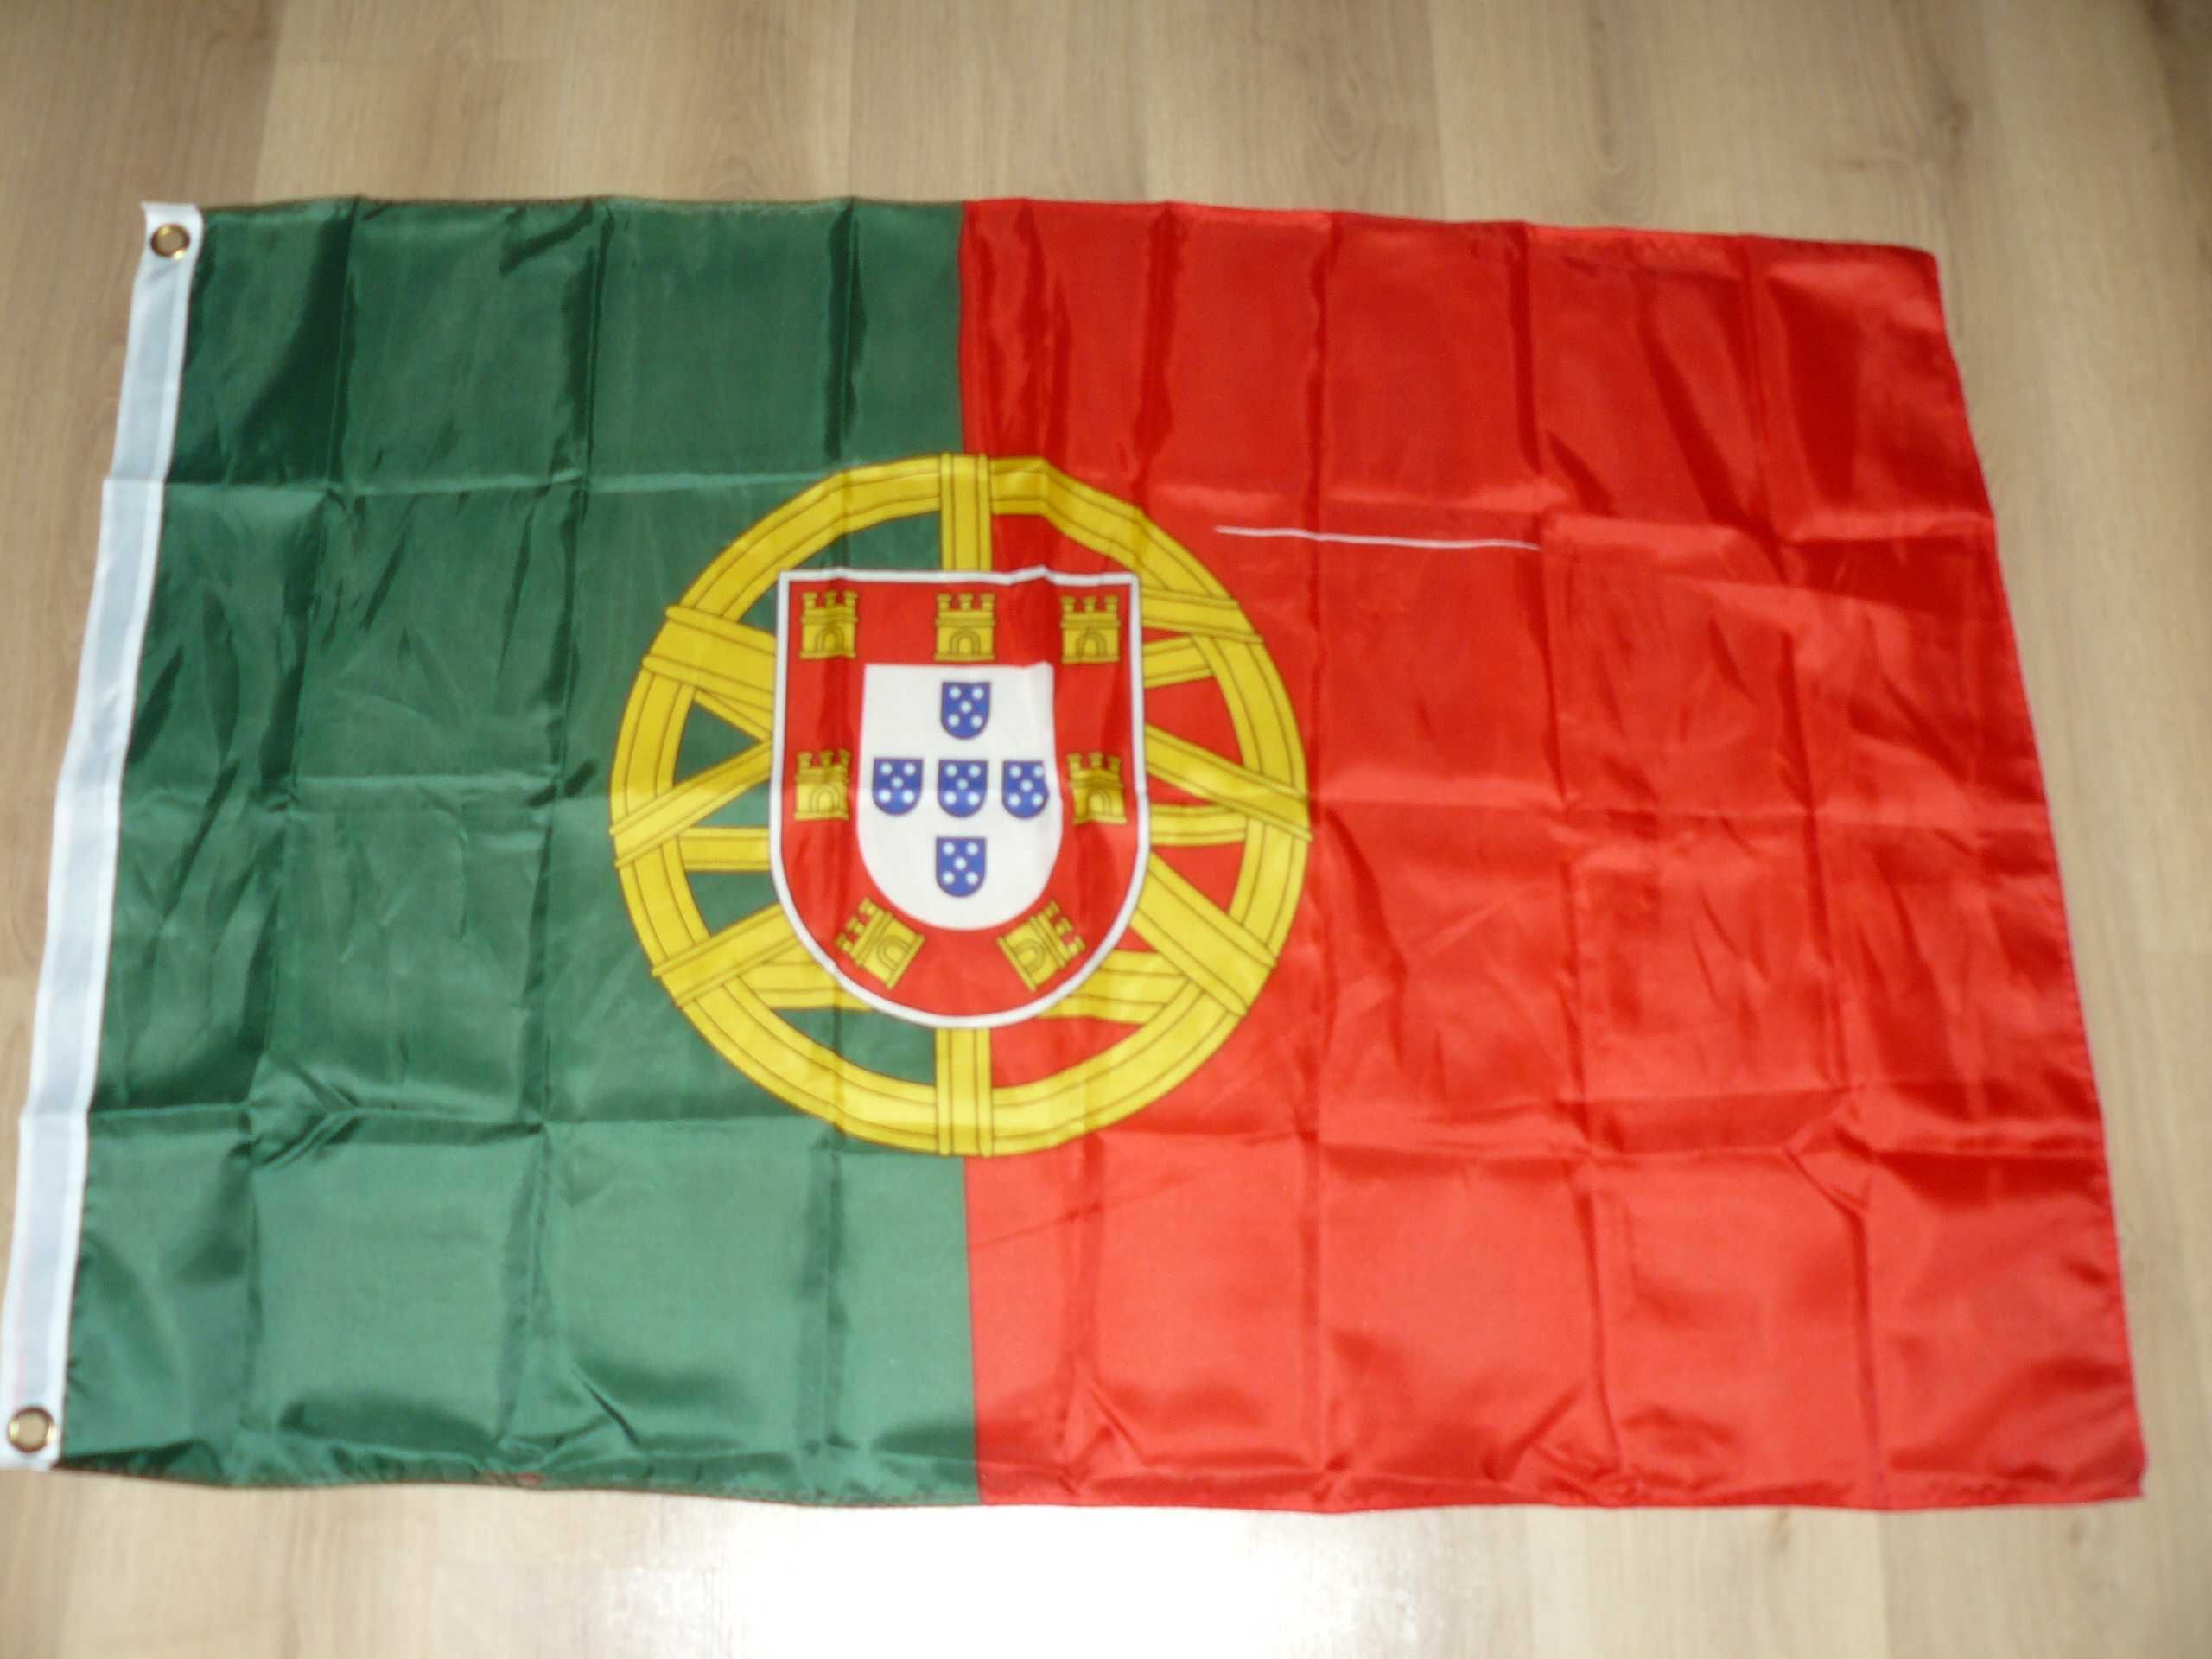 Прапори, банери футбольні, національні (прапор, флаг, банер)